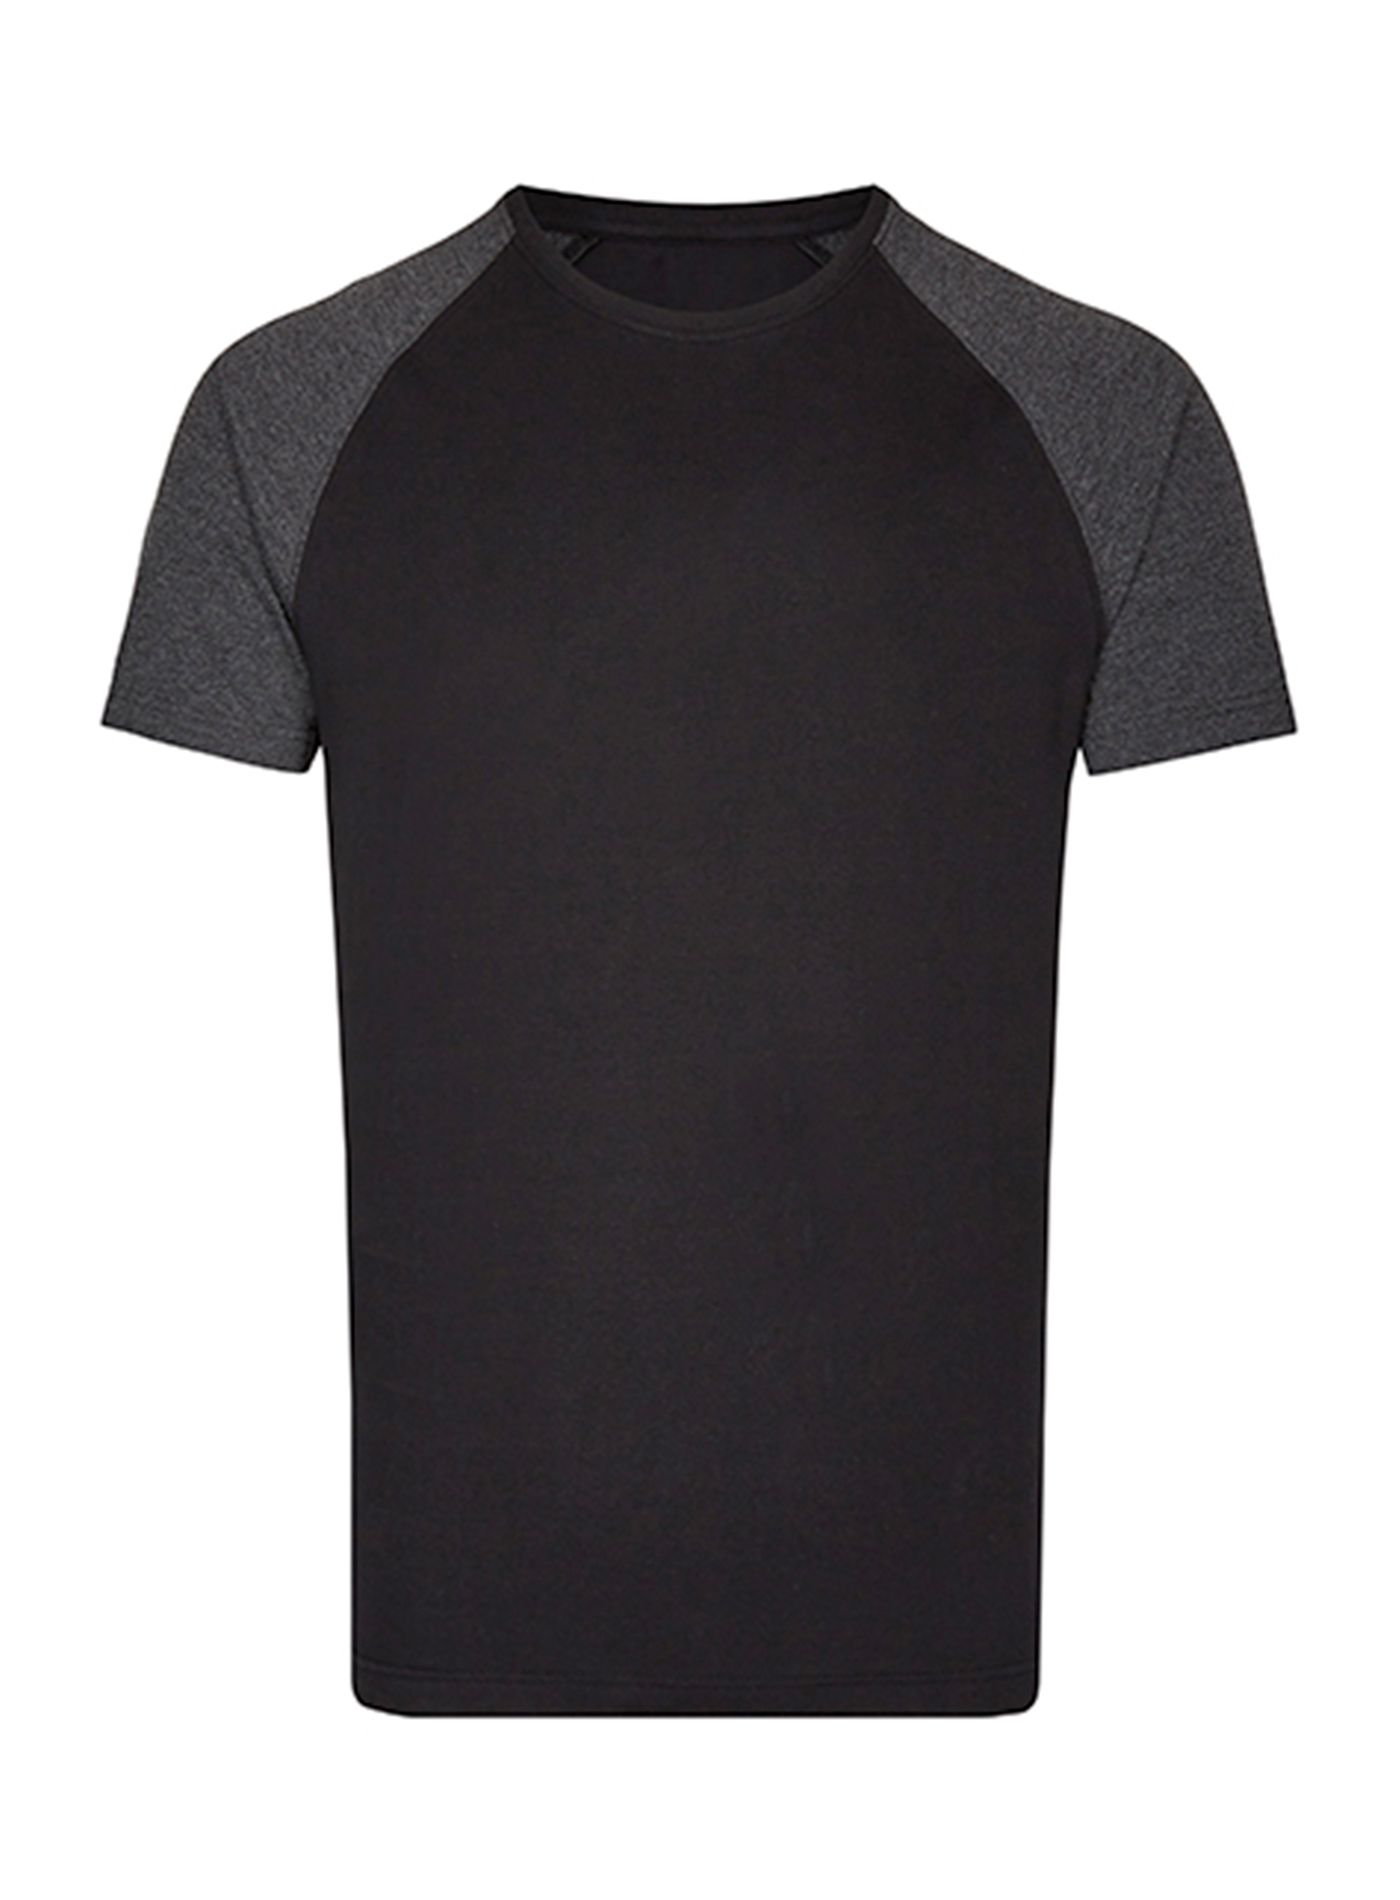 Pánské tričko Miners Mate - Černá a šedá XL